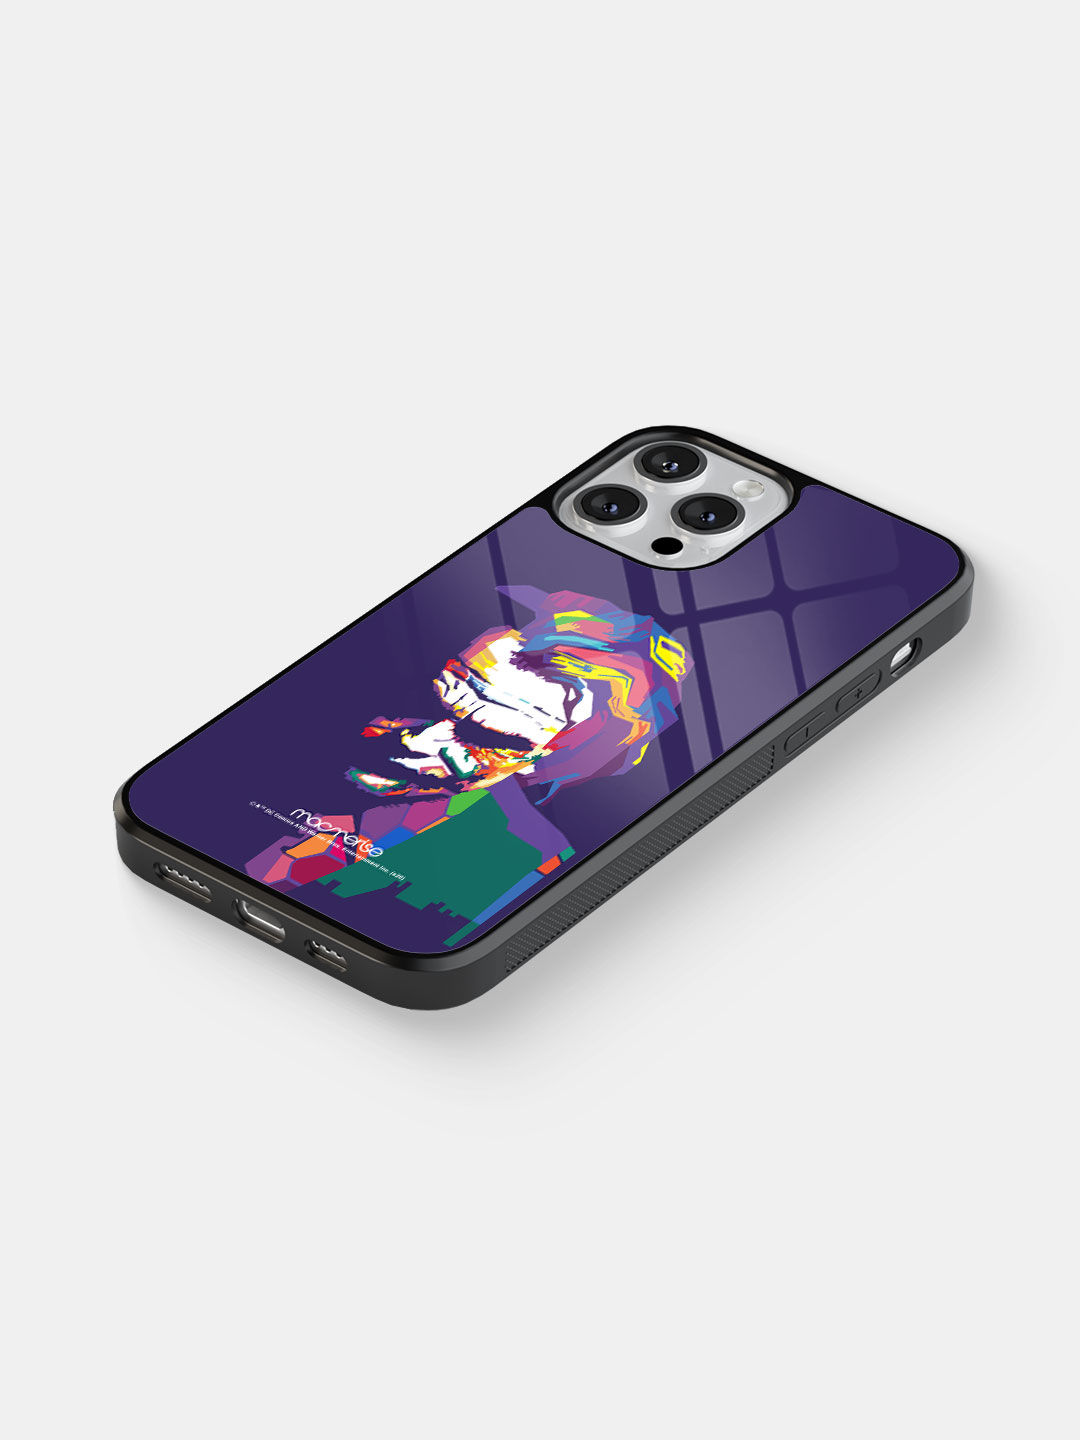 Joker Art - Glass Case For iPhone 13 Pro Max